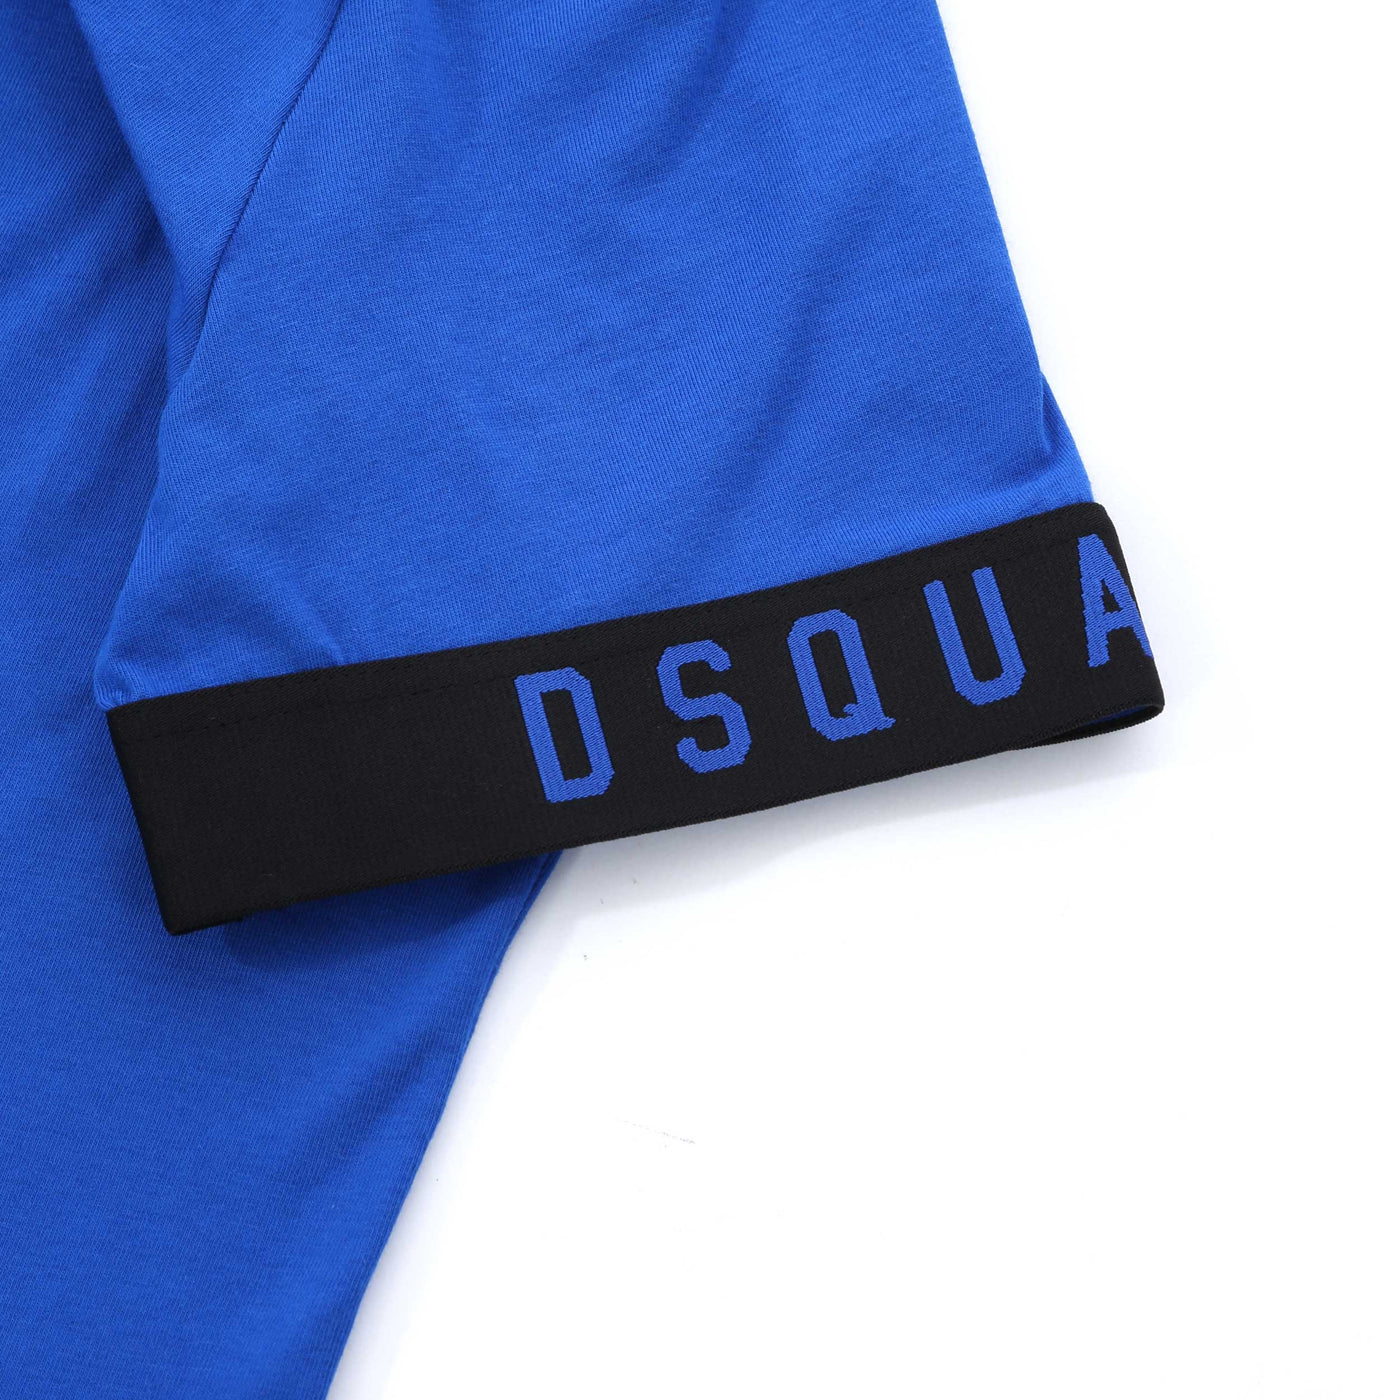 Dsquared2 Arm Band Logo T Shirt in Blue Black Cuff